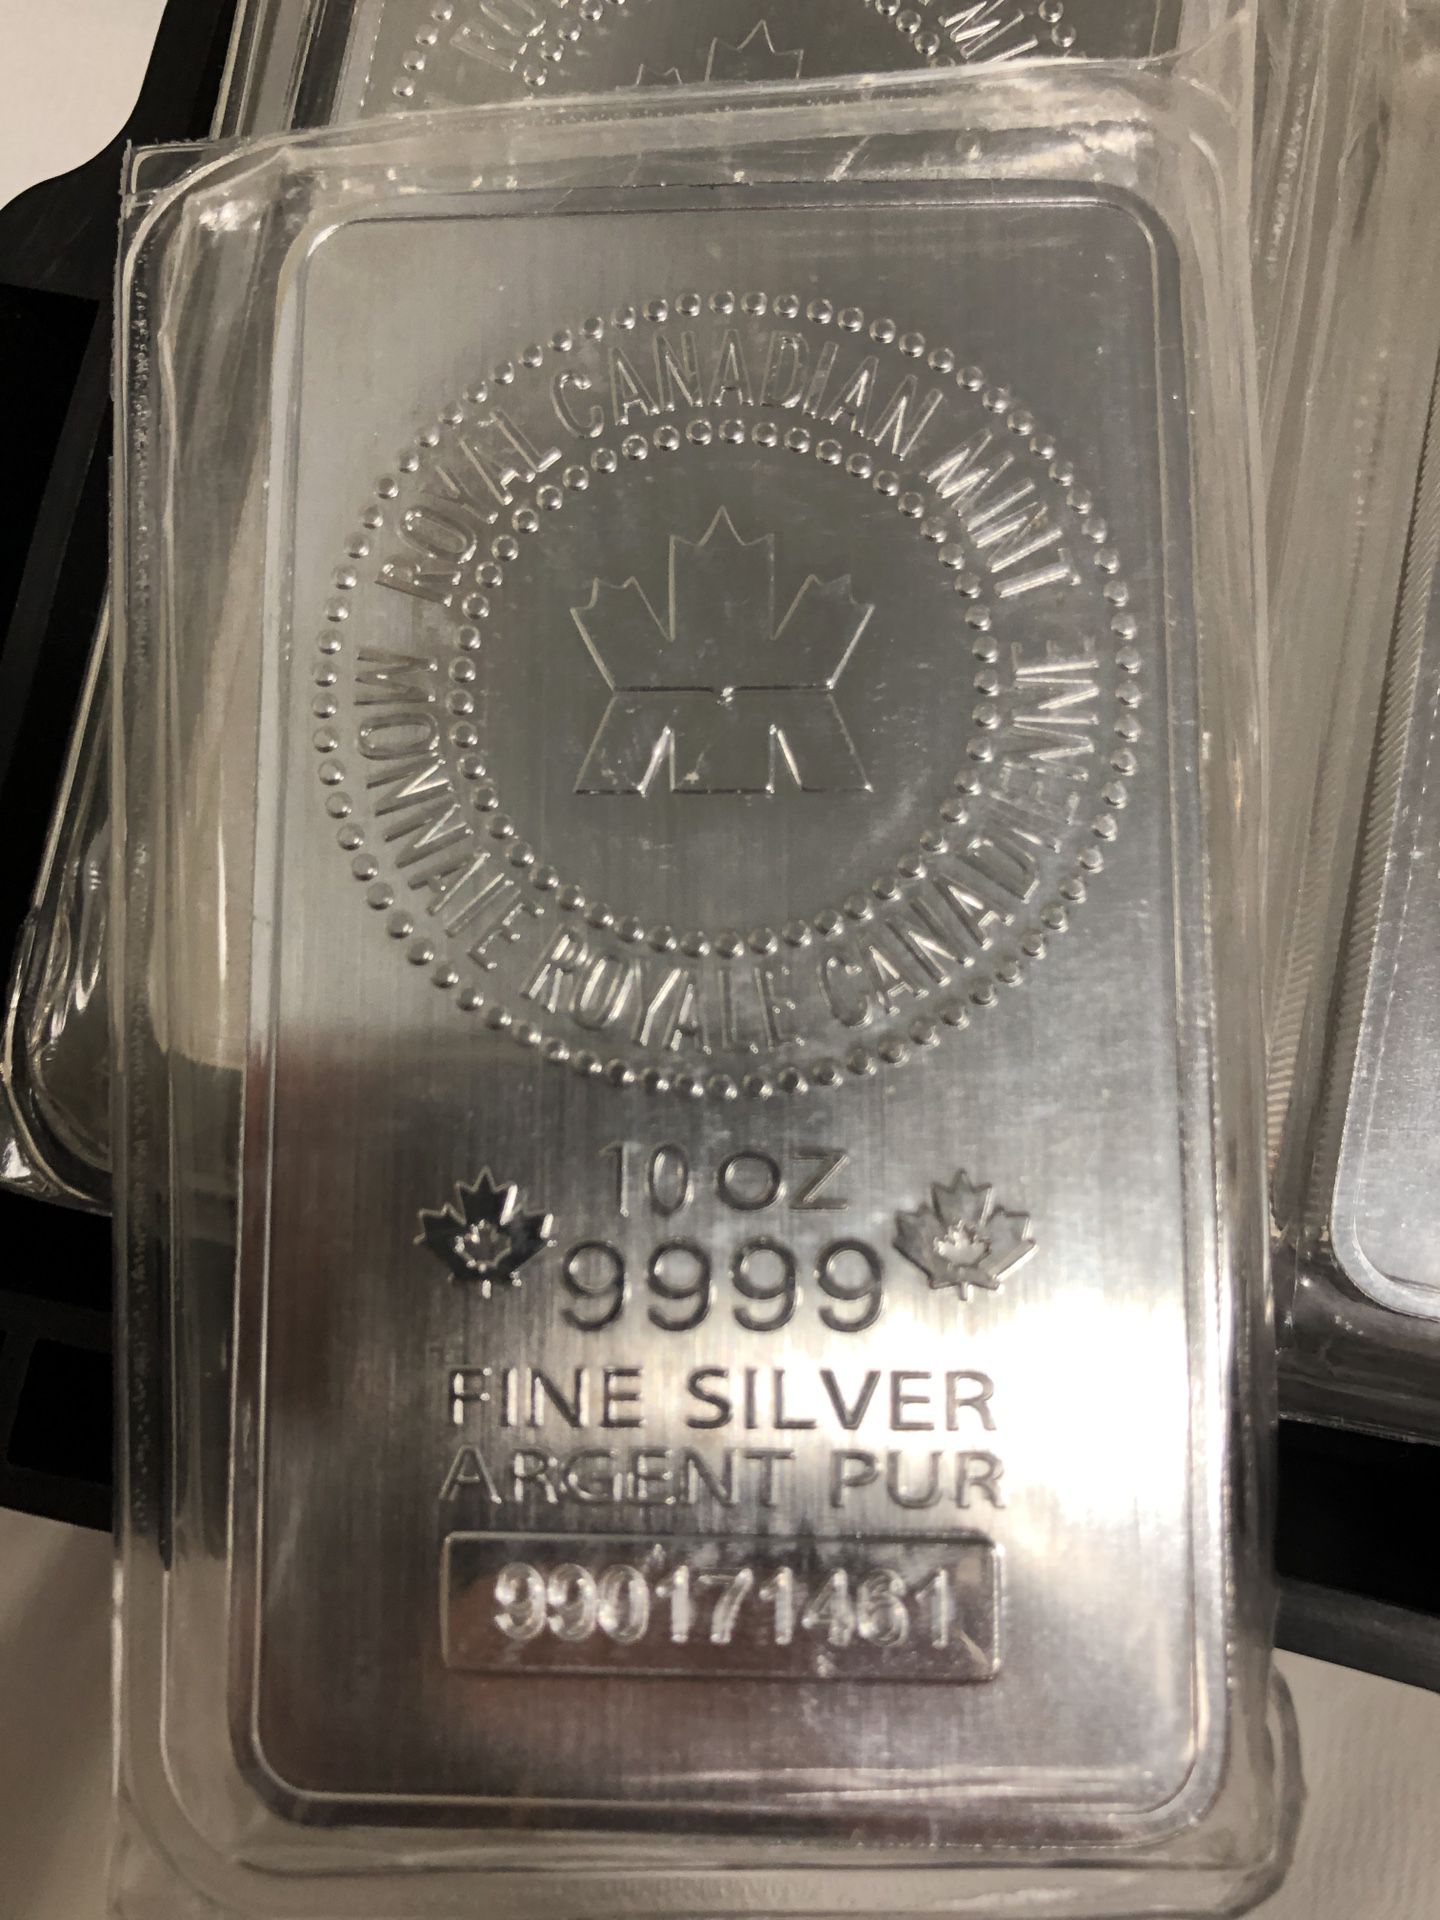 10 oz (RCM) Royal Canadian Mint Silver Bar (New)